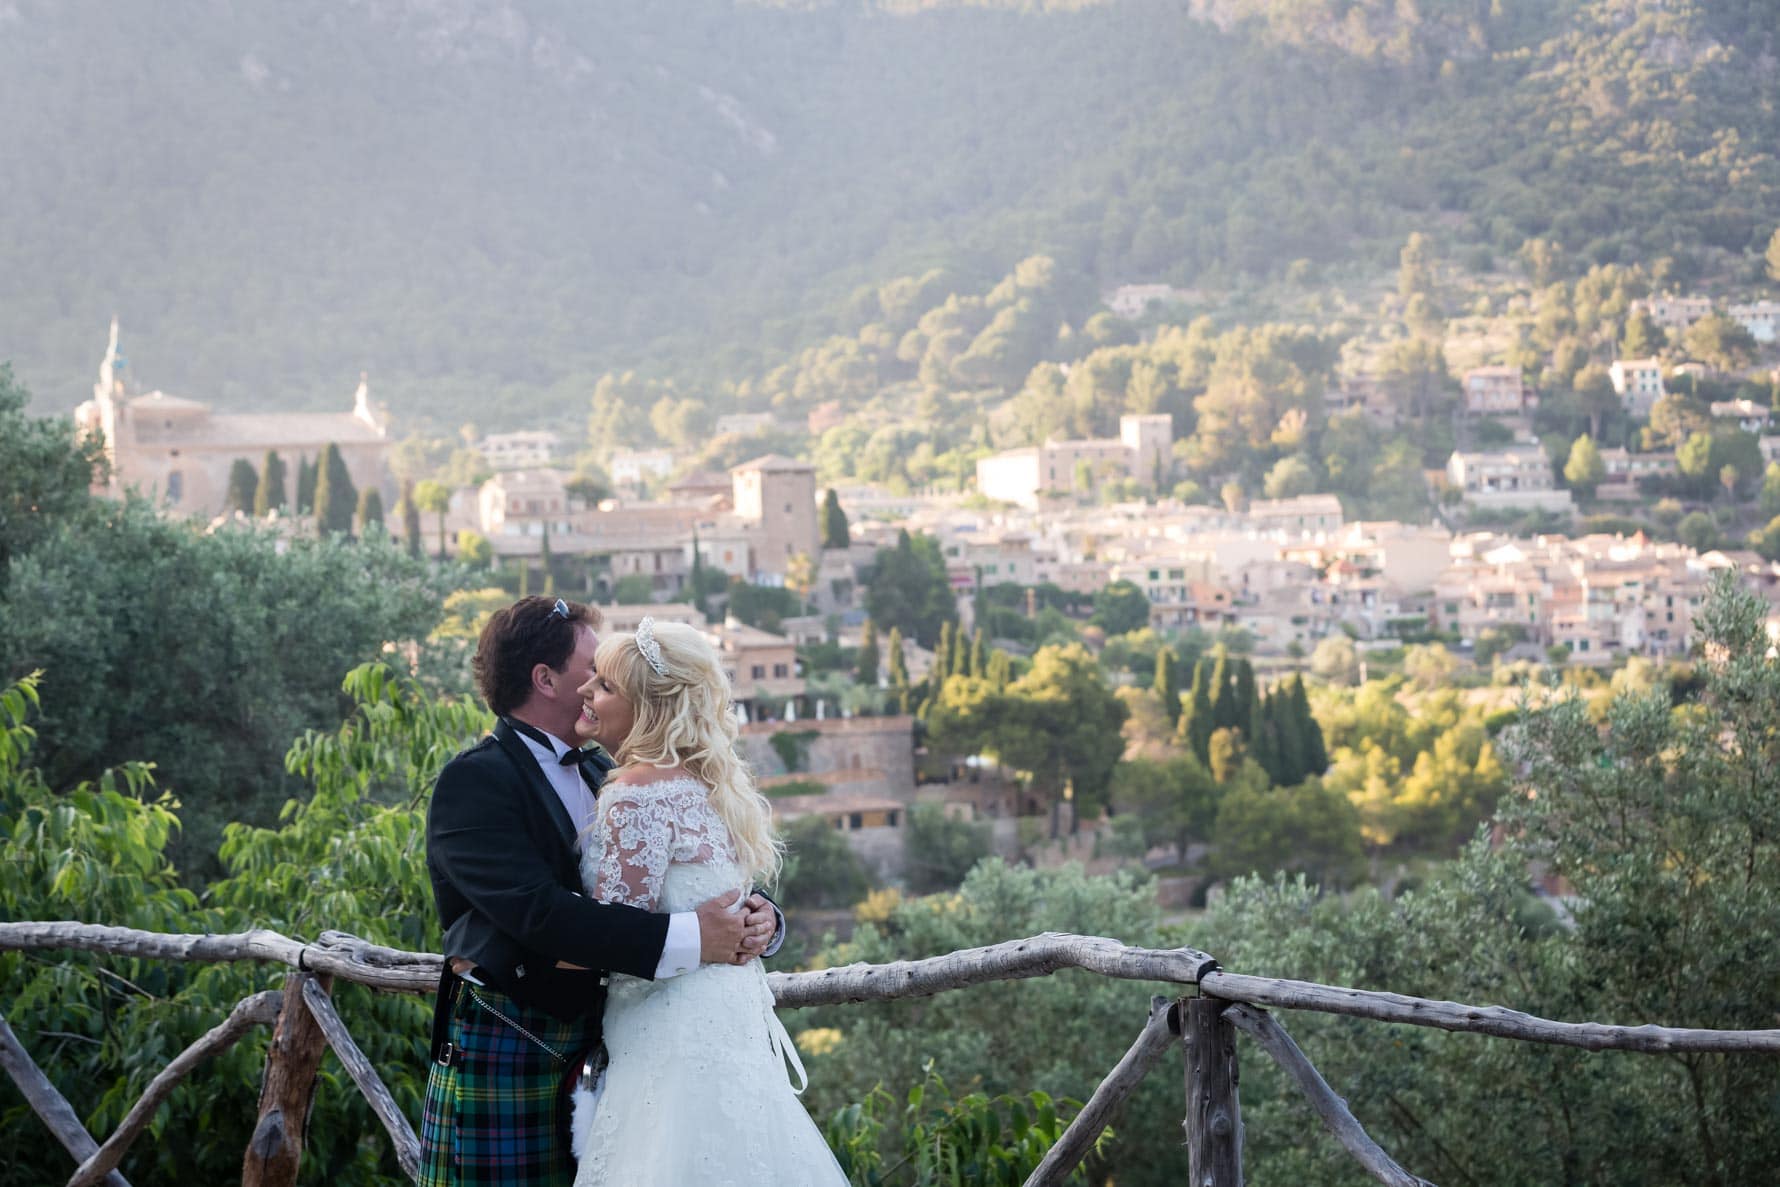 The newlyweds hug after their Mallorca wedding overlooking Valldemossa